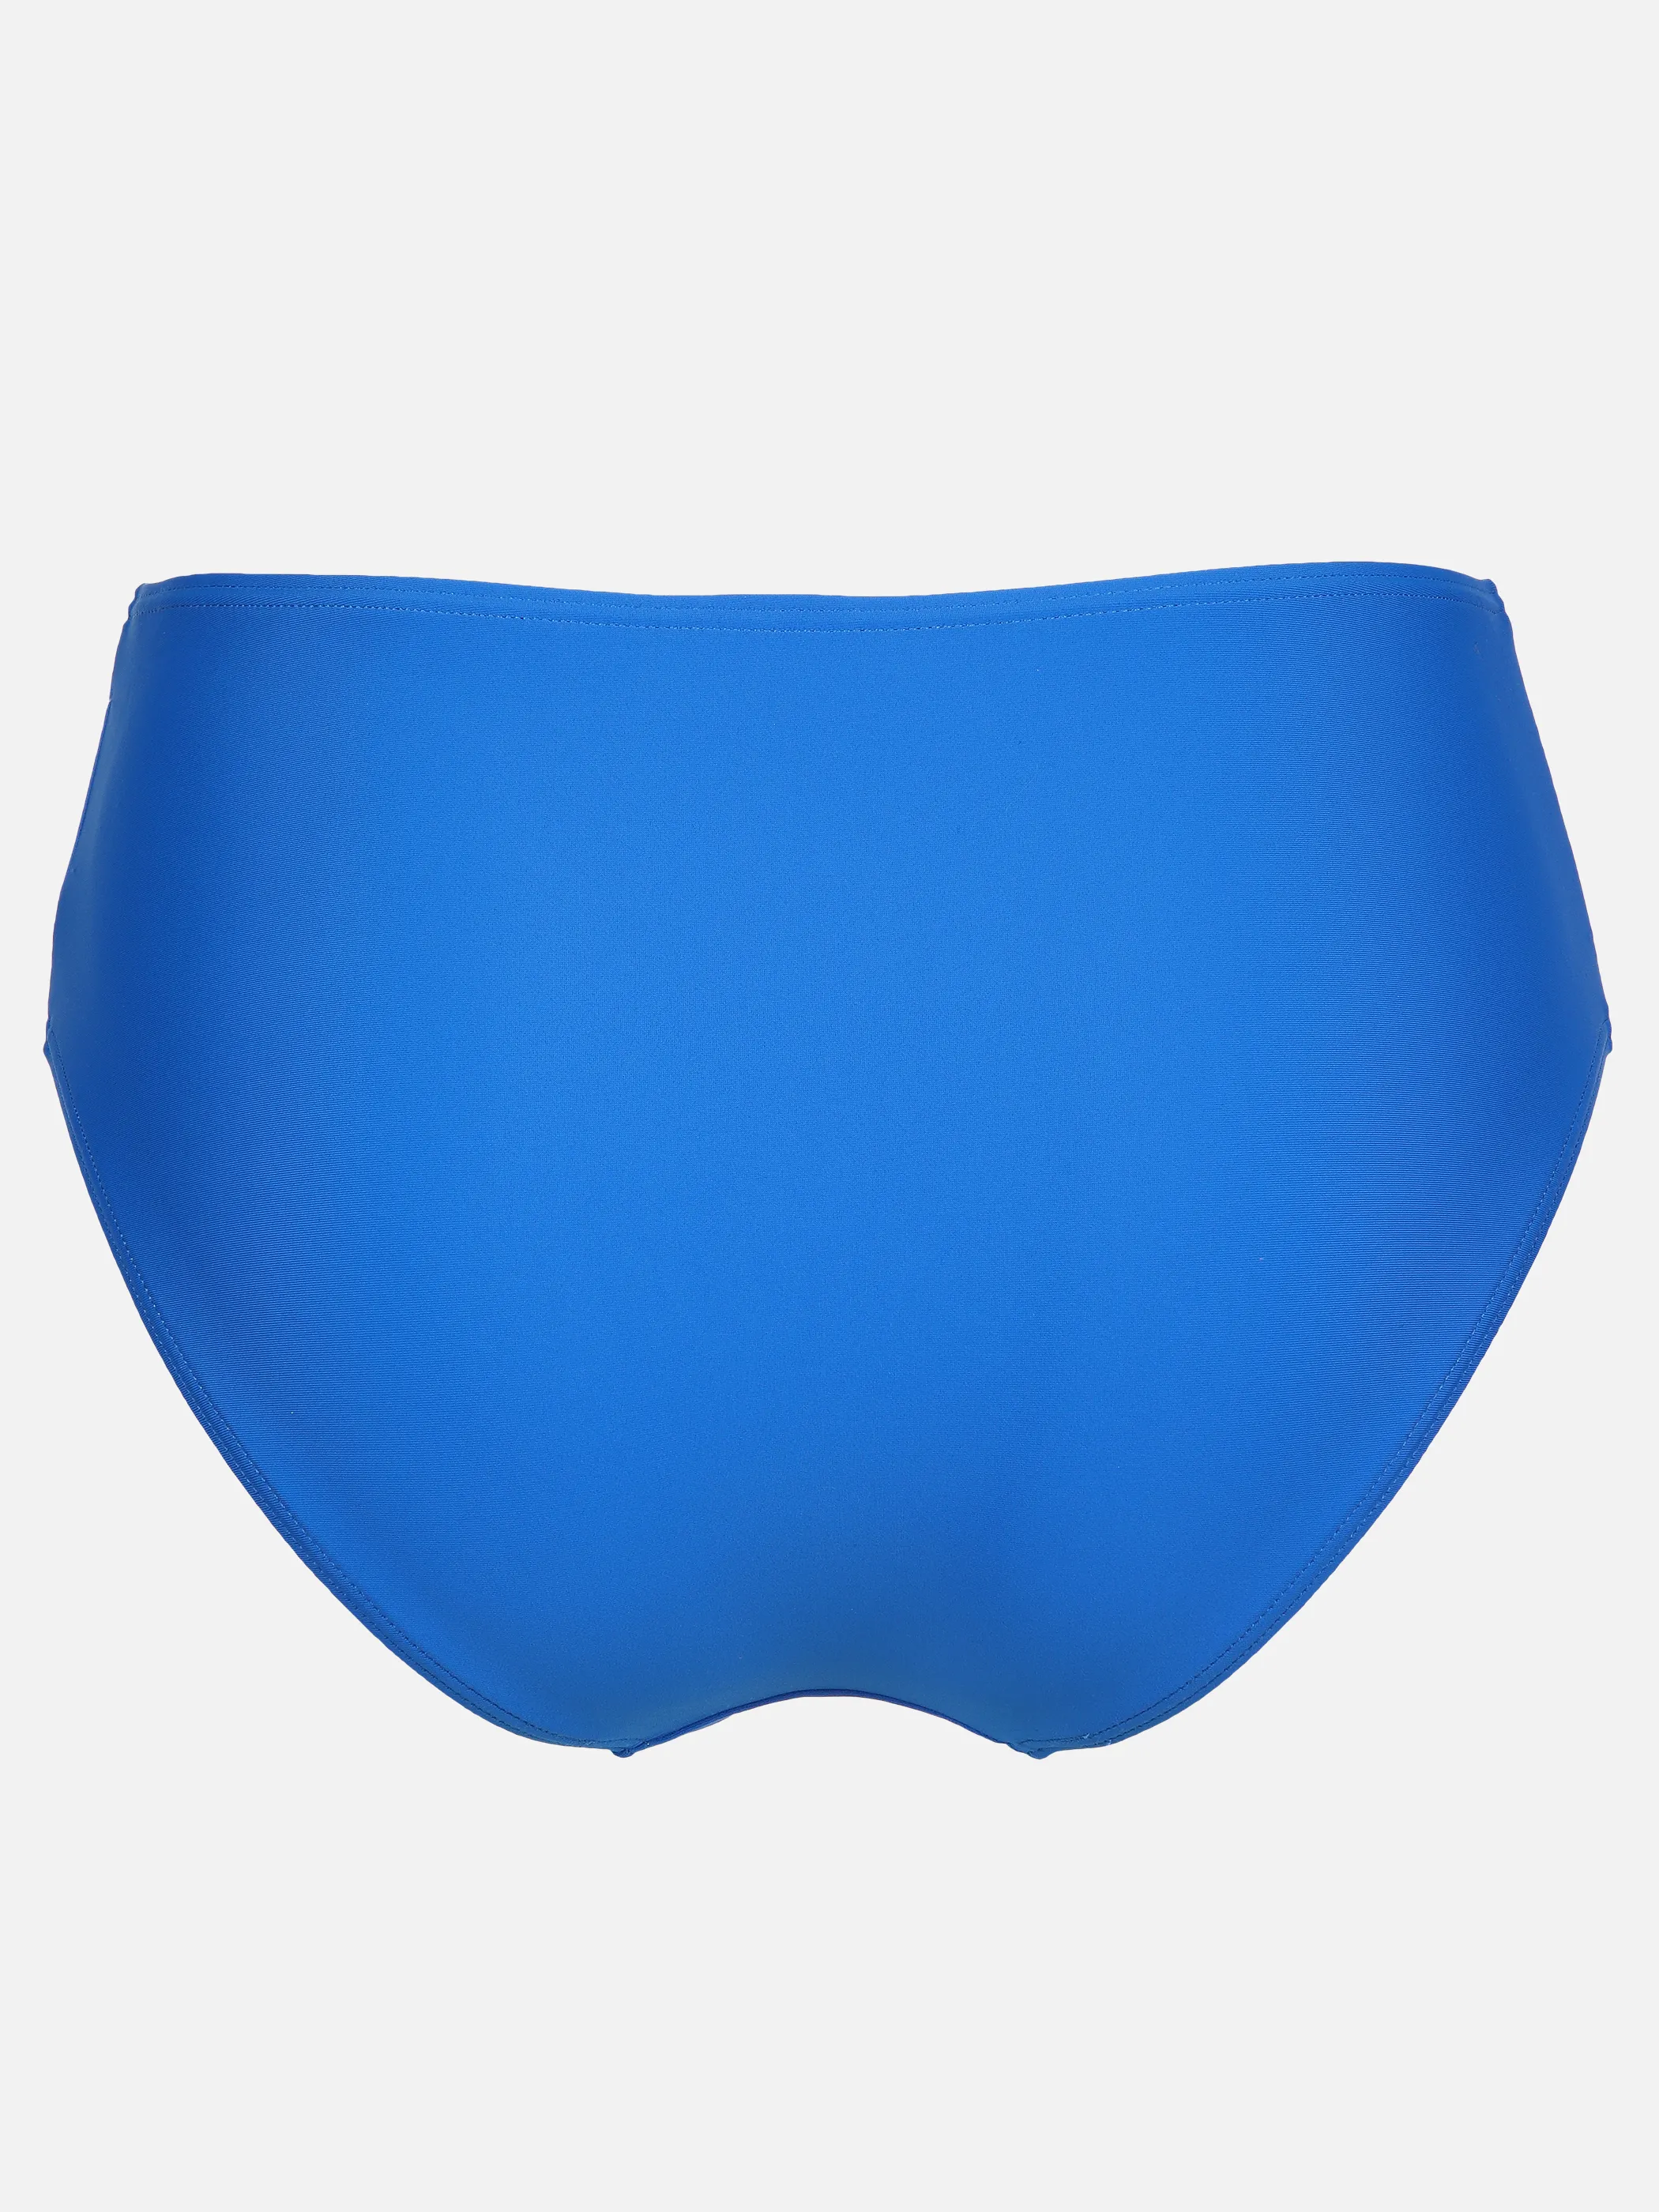 Grinario Sports Da-Bikini Hose Blau 890112 ROYAL BLUE 2